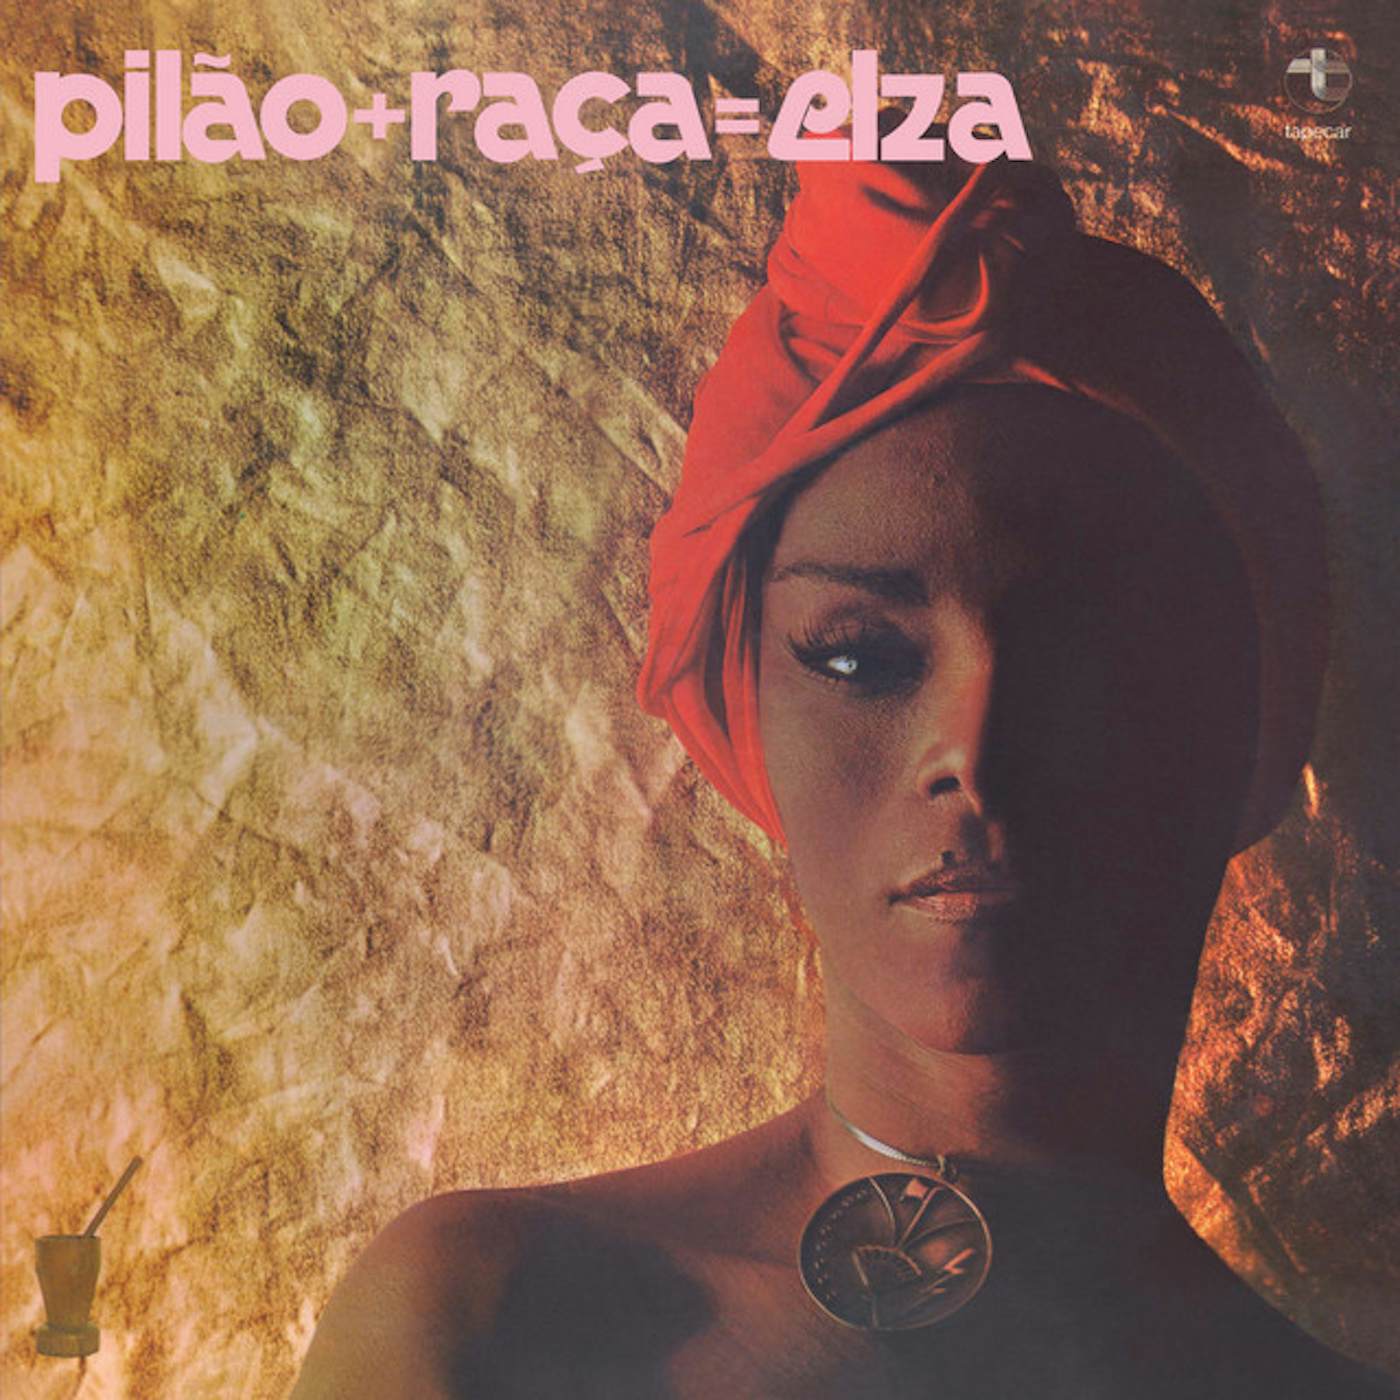 Elza Soares PILAO + RACA = ELZA CD